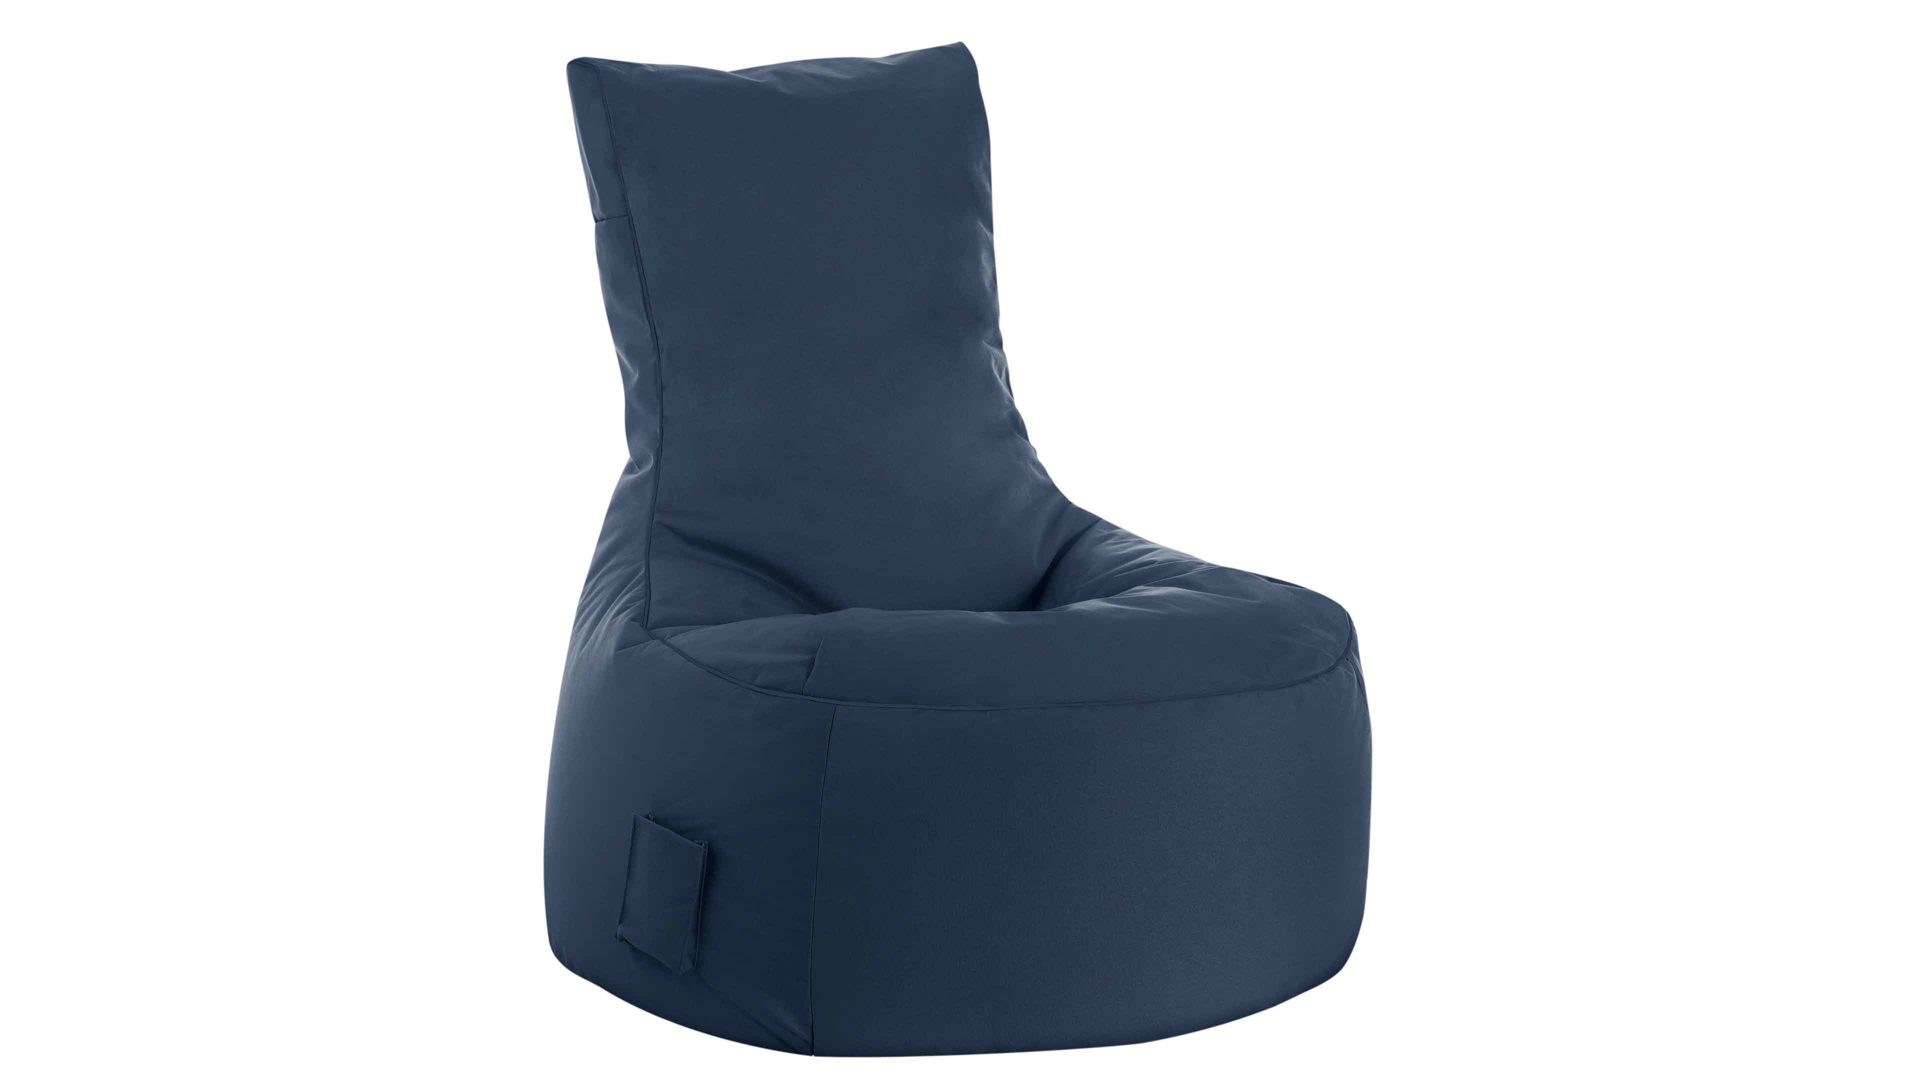 Sitzsack-Sessel Magma sitting point aus Kunstfaser in Dunkelblau SITTING POINT Sitzsack-Sessel swing scuba® jeansblaue Kunstfaser - ca. 95 x 90 x 65 cm